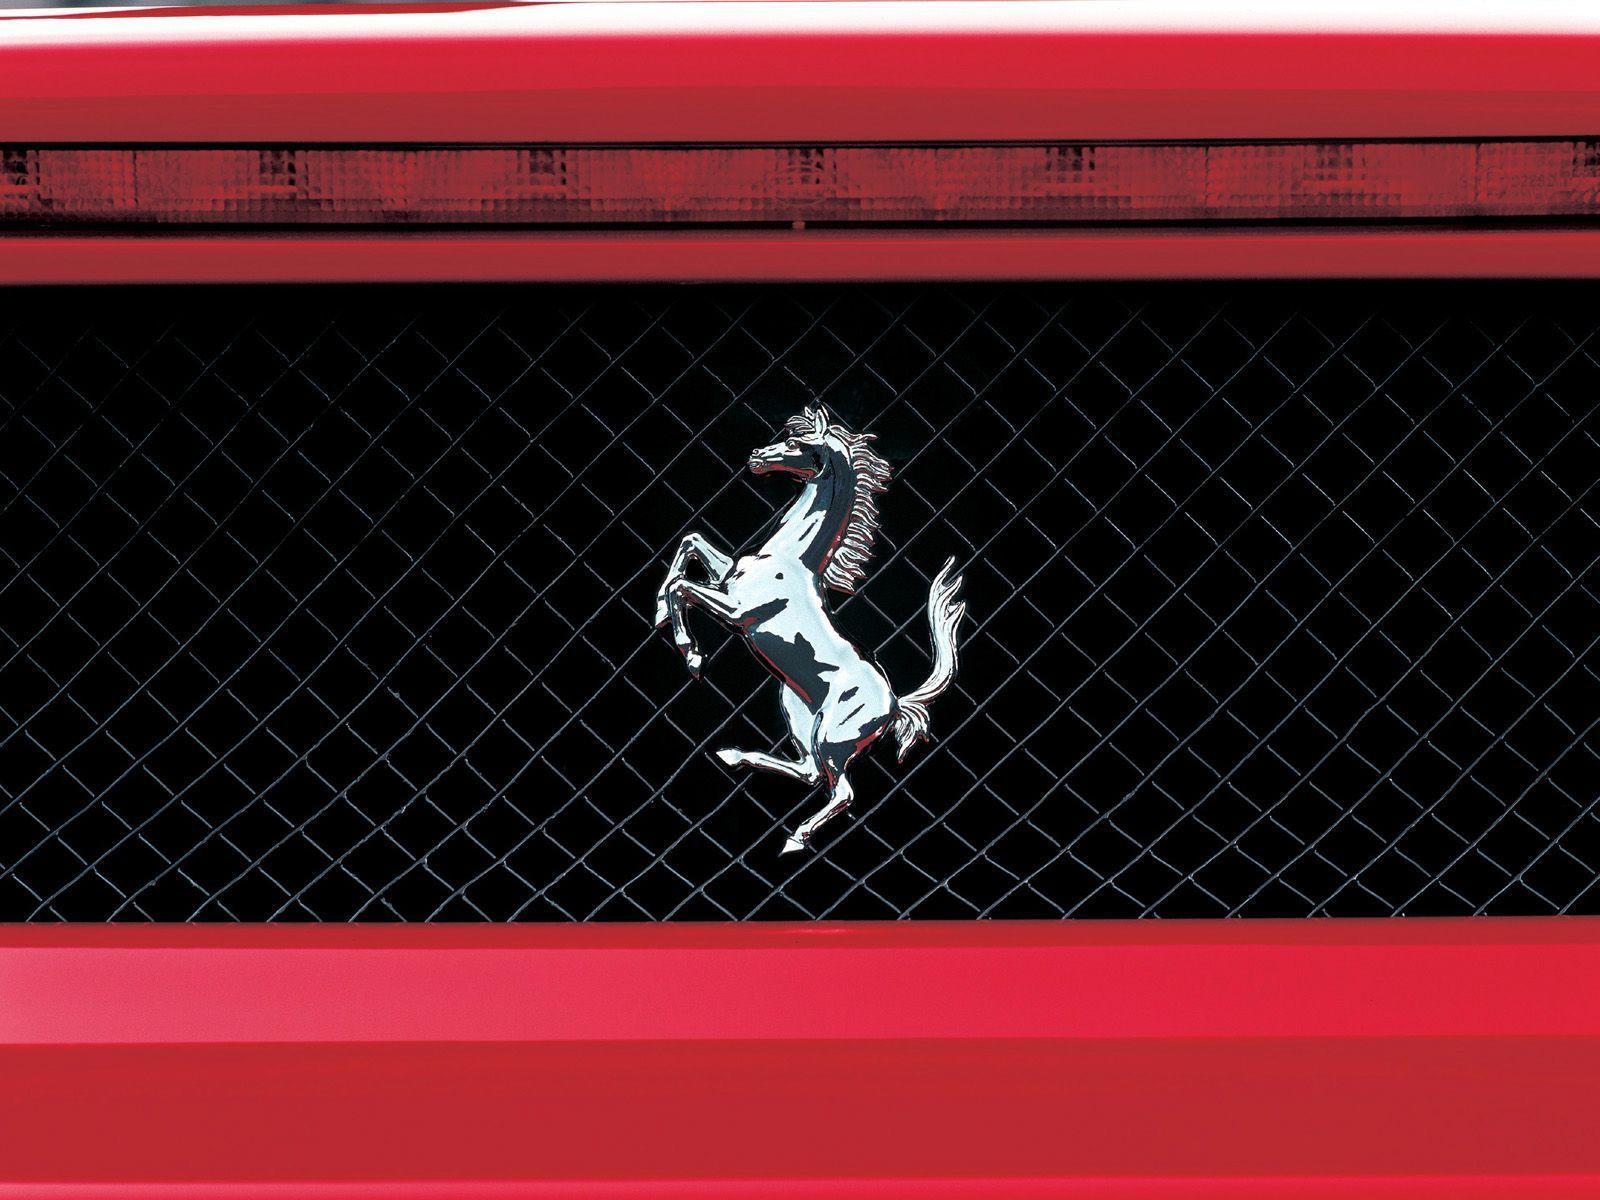 Ferrari Horse Logo Red iPhone Wallpaper Download